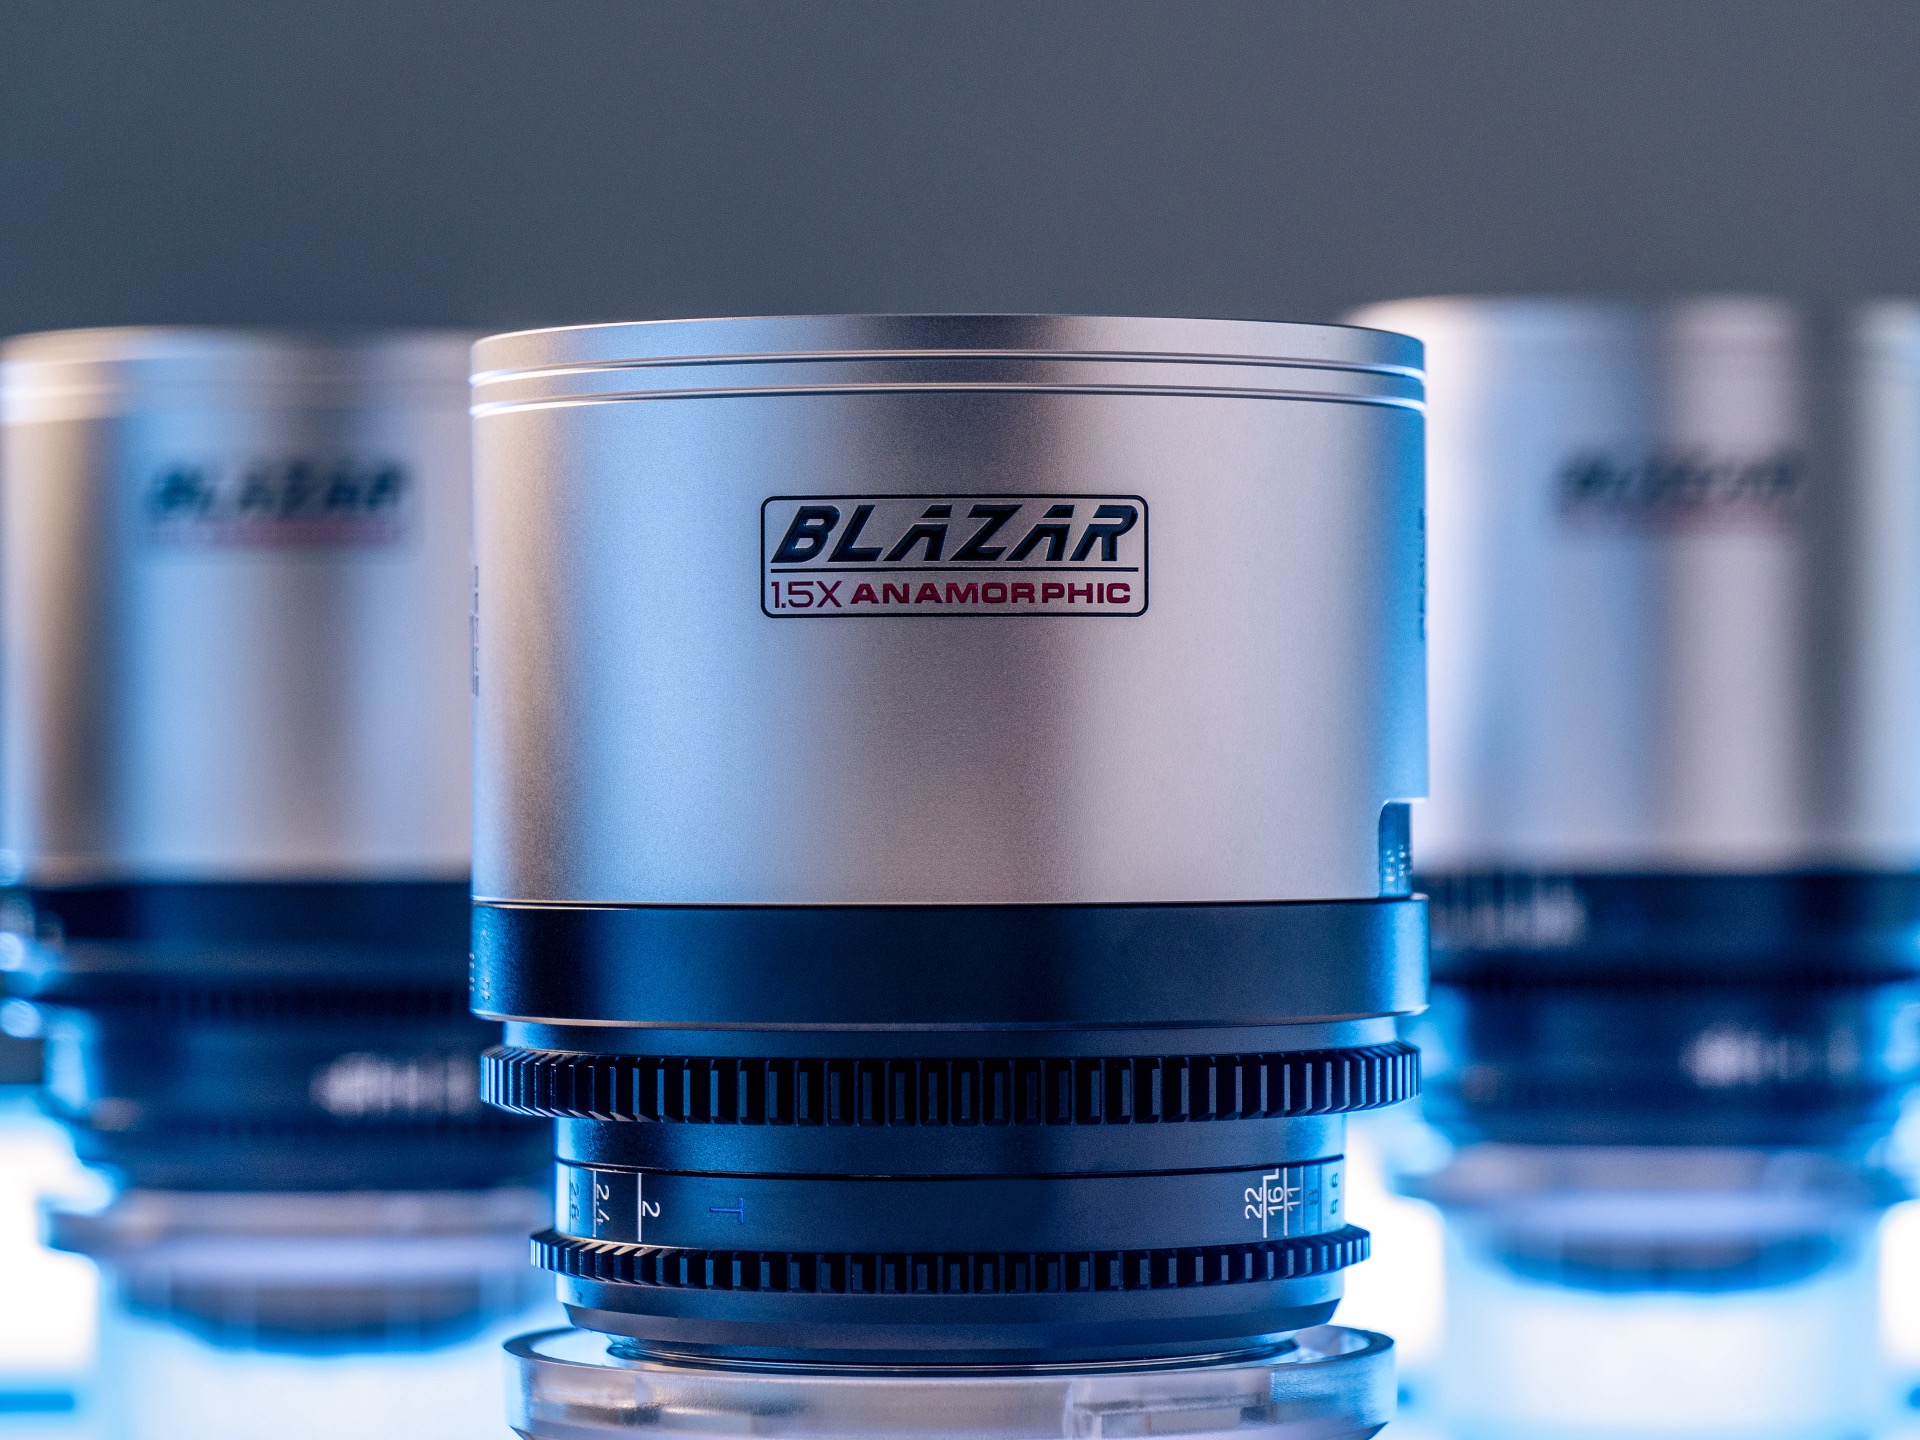 Review: Blazar Remus 1.5x anamorphic lenses 16